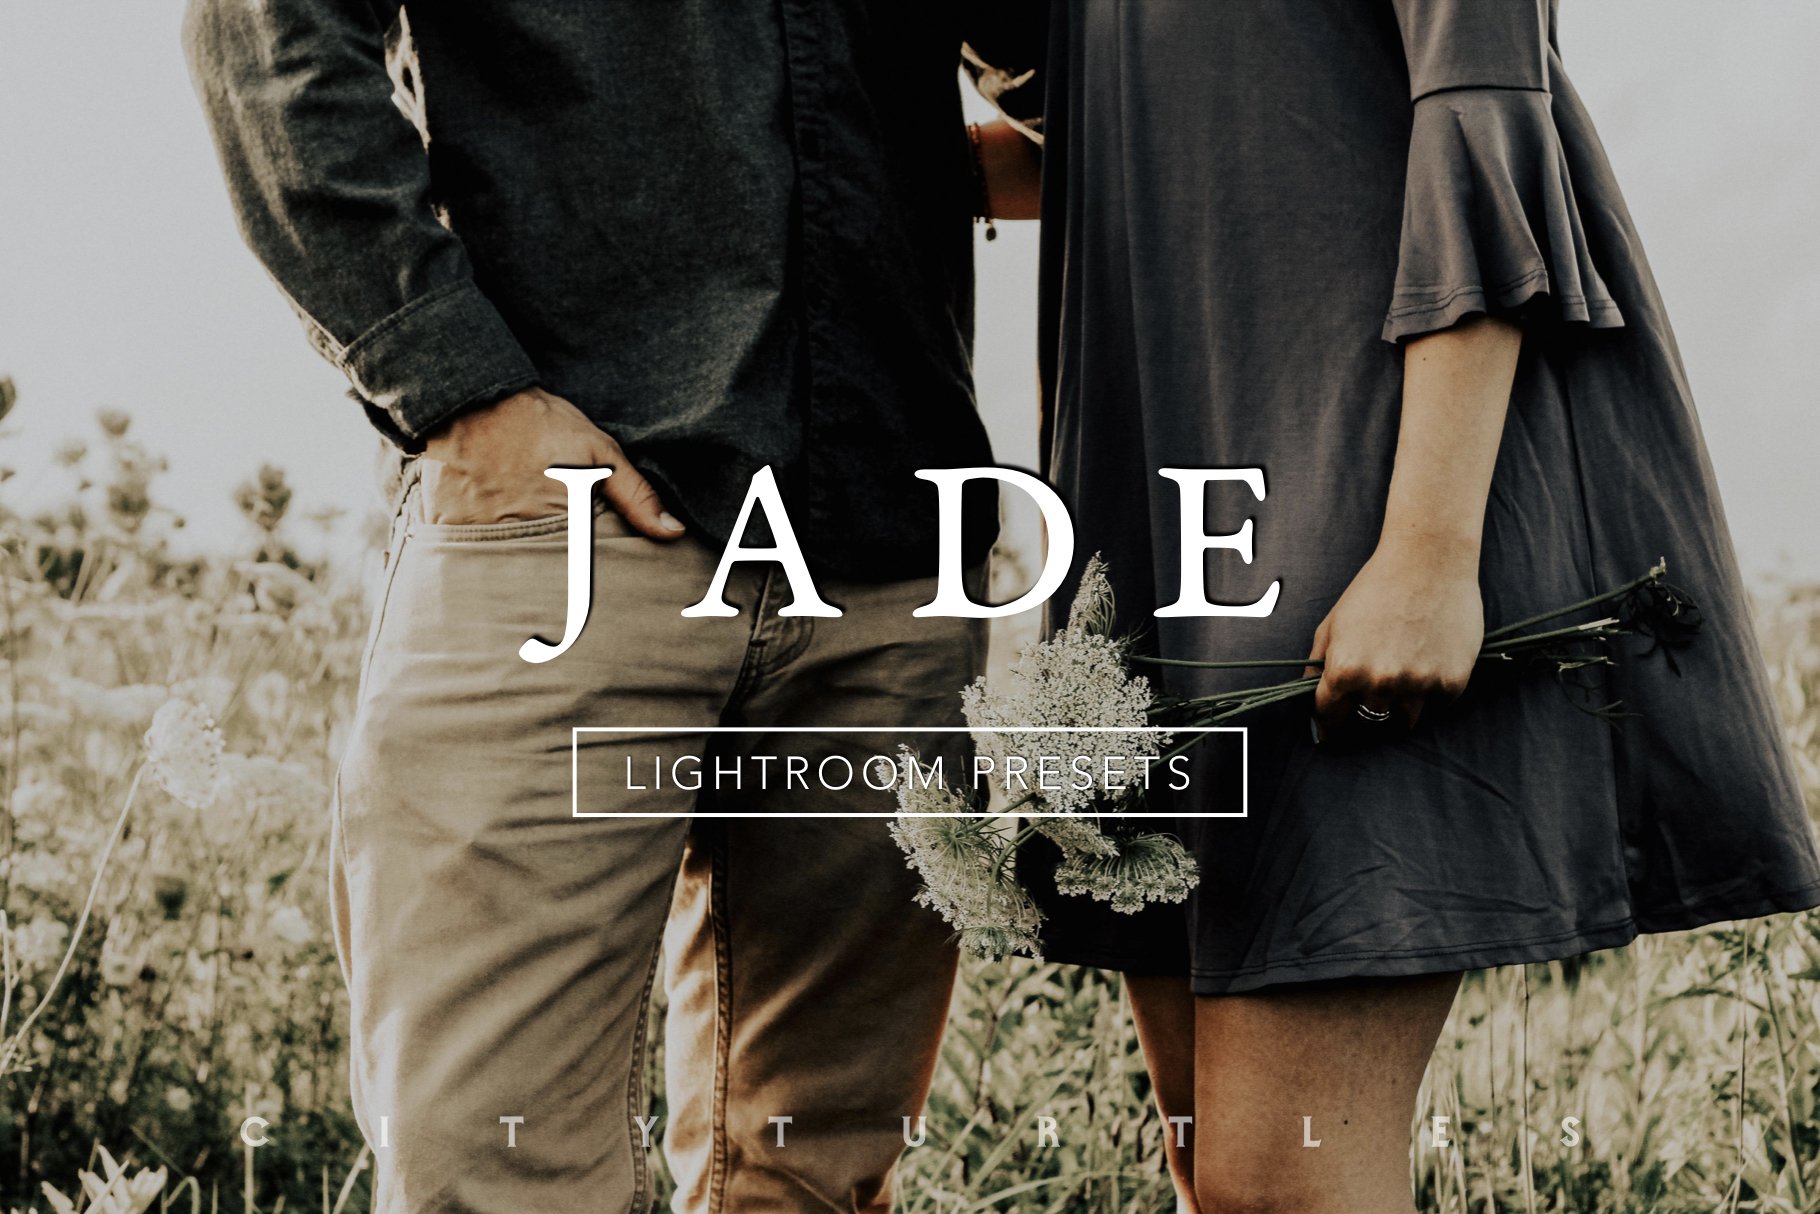 JADE Deep Moody Lightroom Presetscover image.